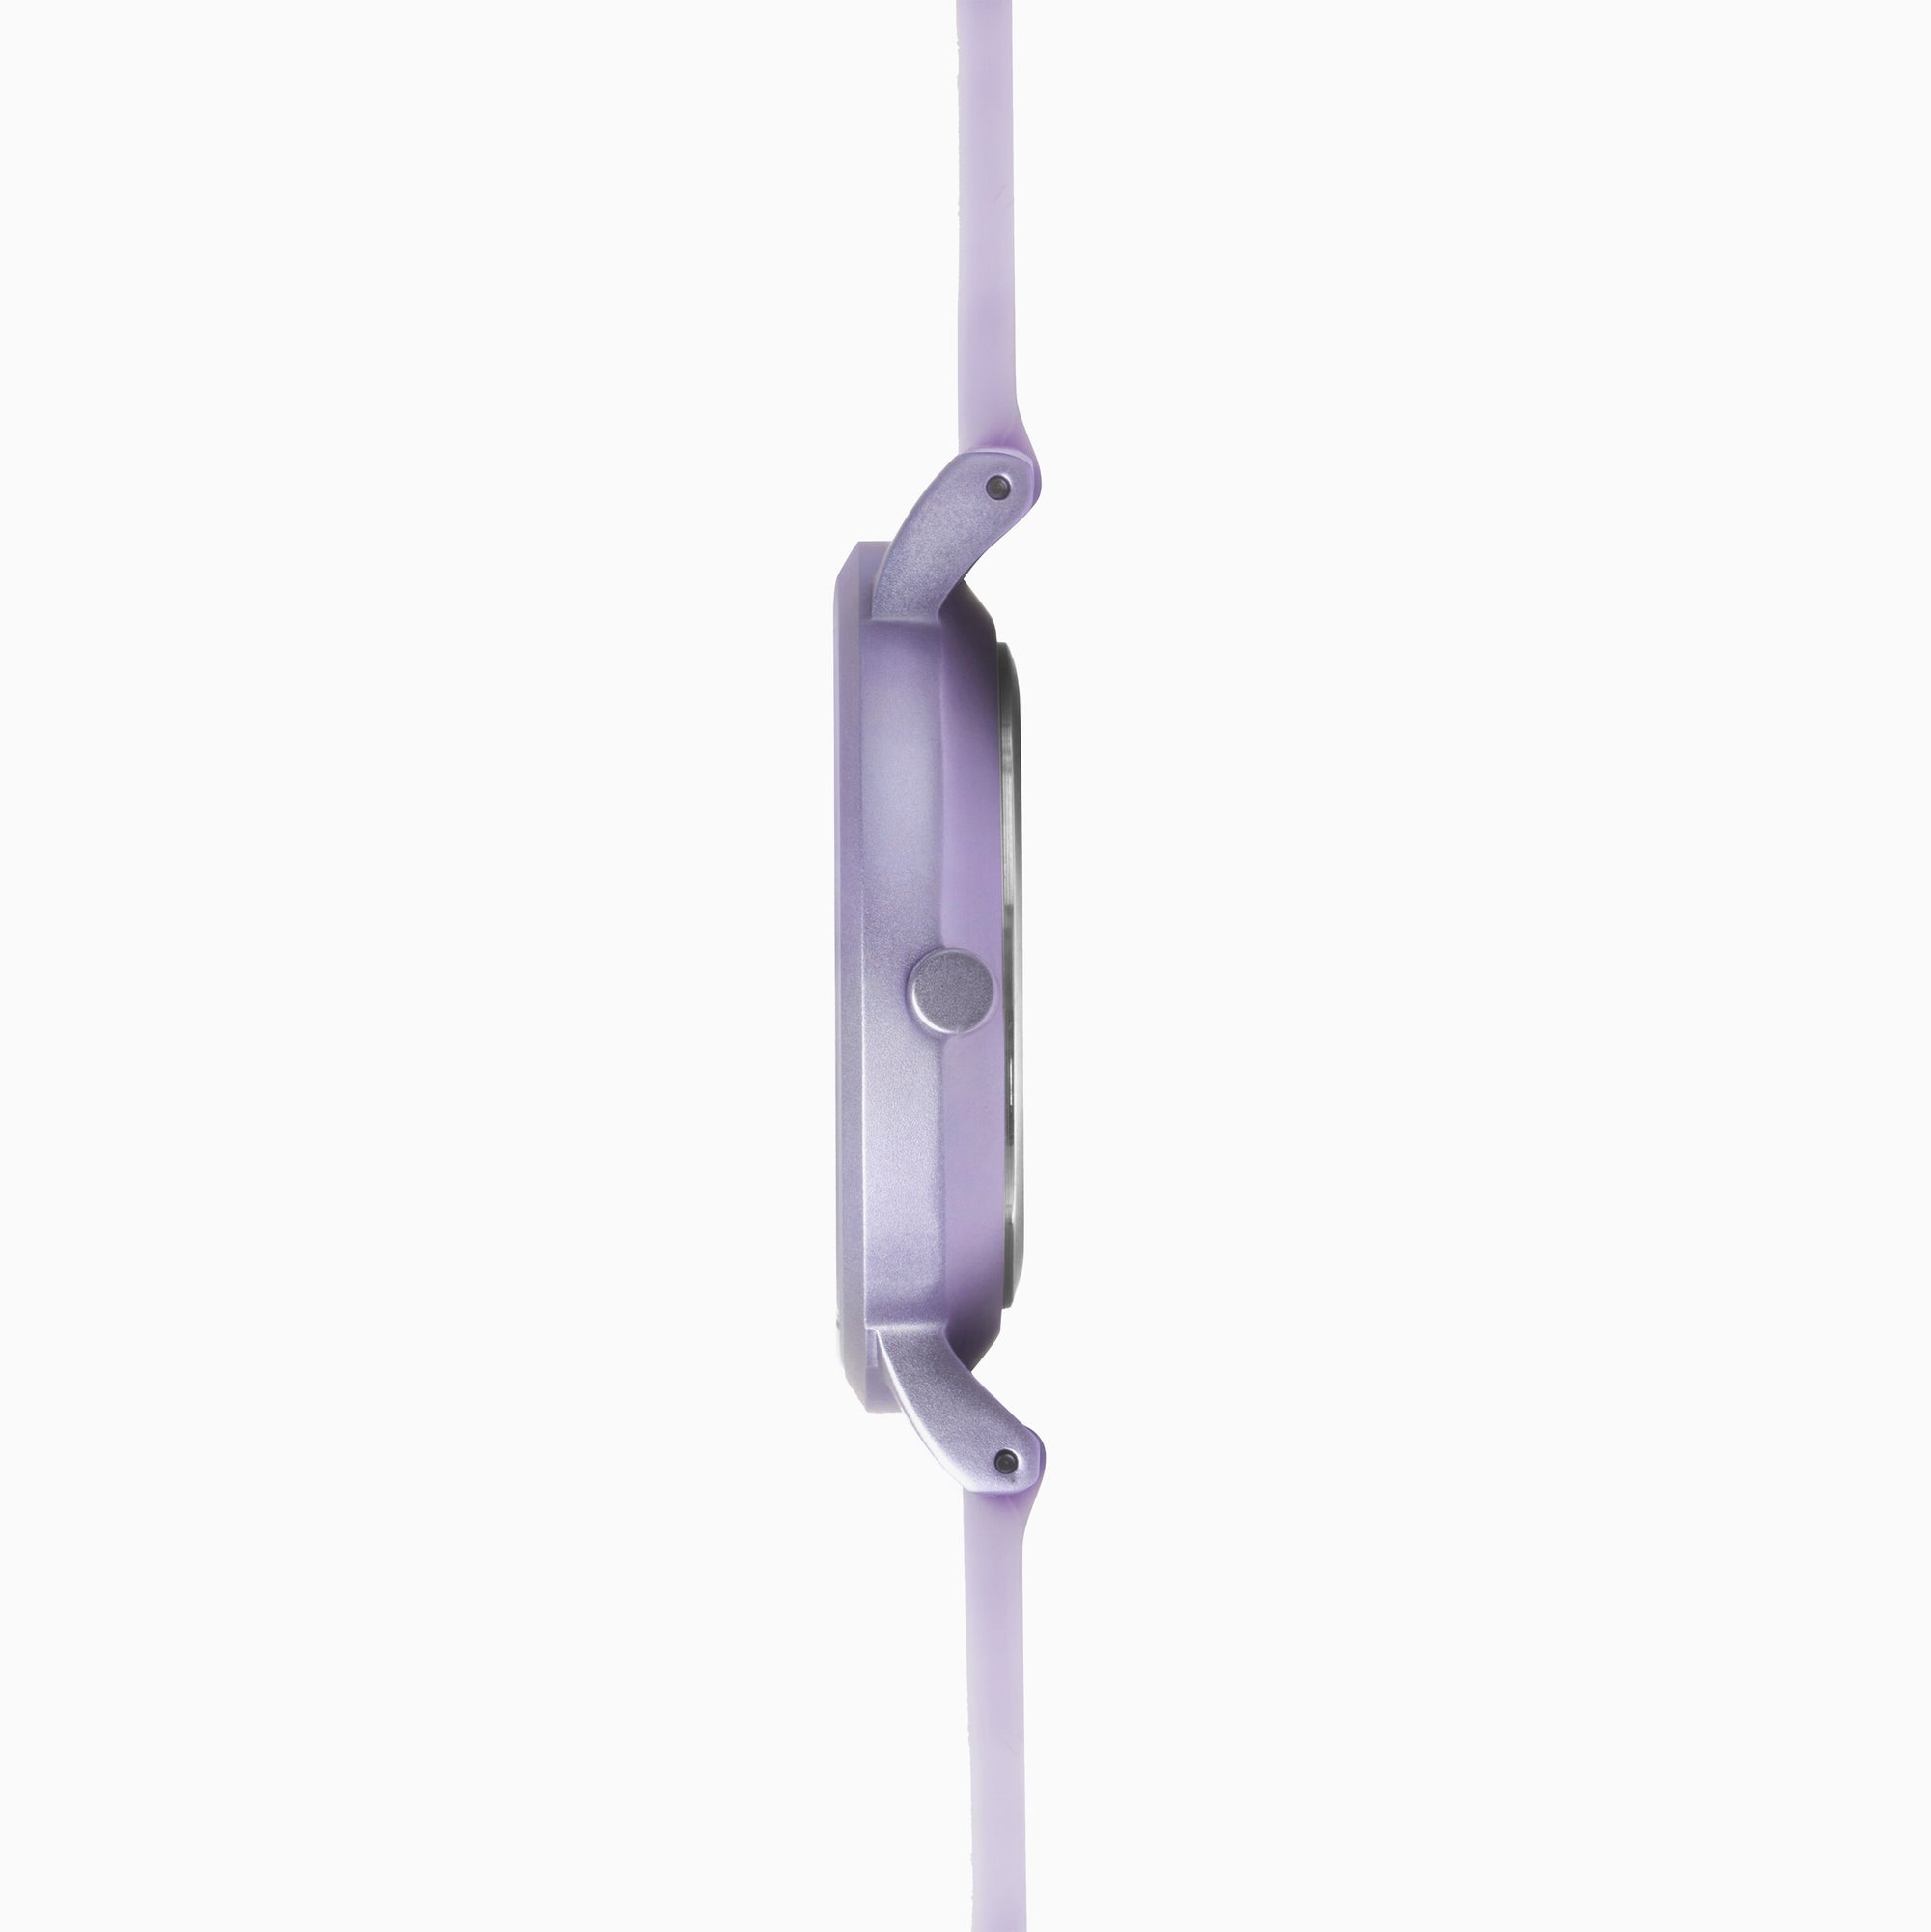 Sekonda Palette Ladies Watch | Light Violet Case & Silicone Strap with Light Violet Dial